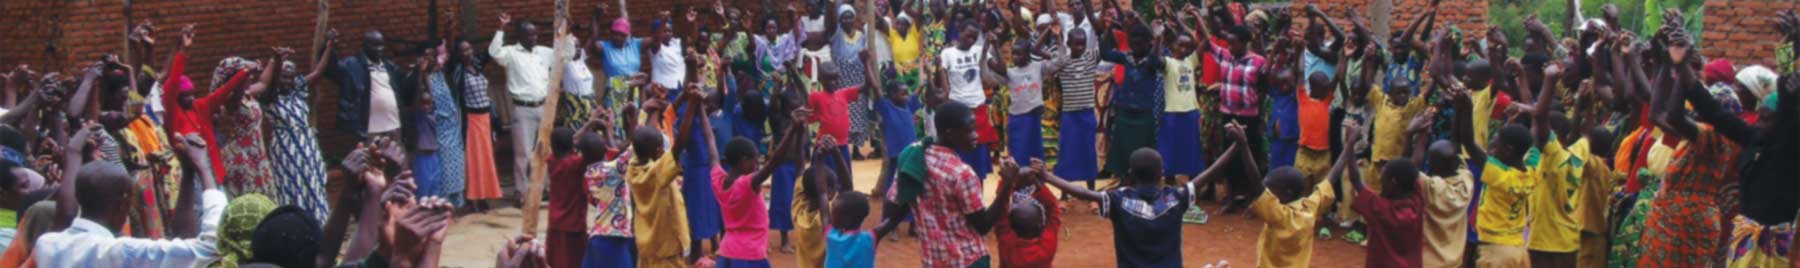 Villagers, both Tutsi and Hutu, gather to celebrate at the building site of Iriba Shalom International’s community center in Mukoma (2015).